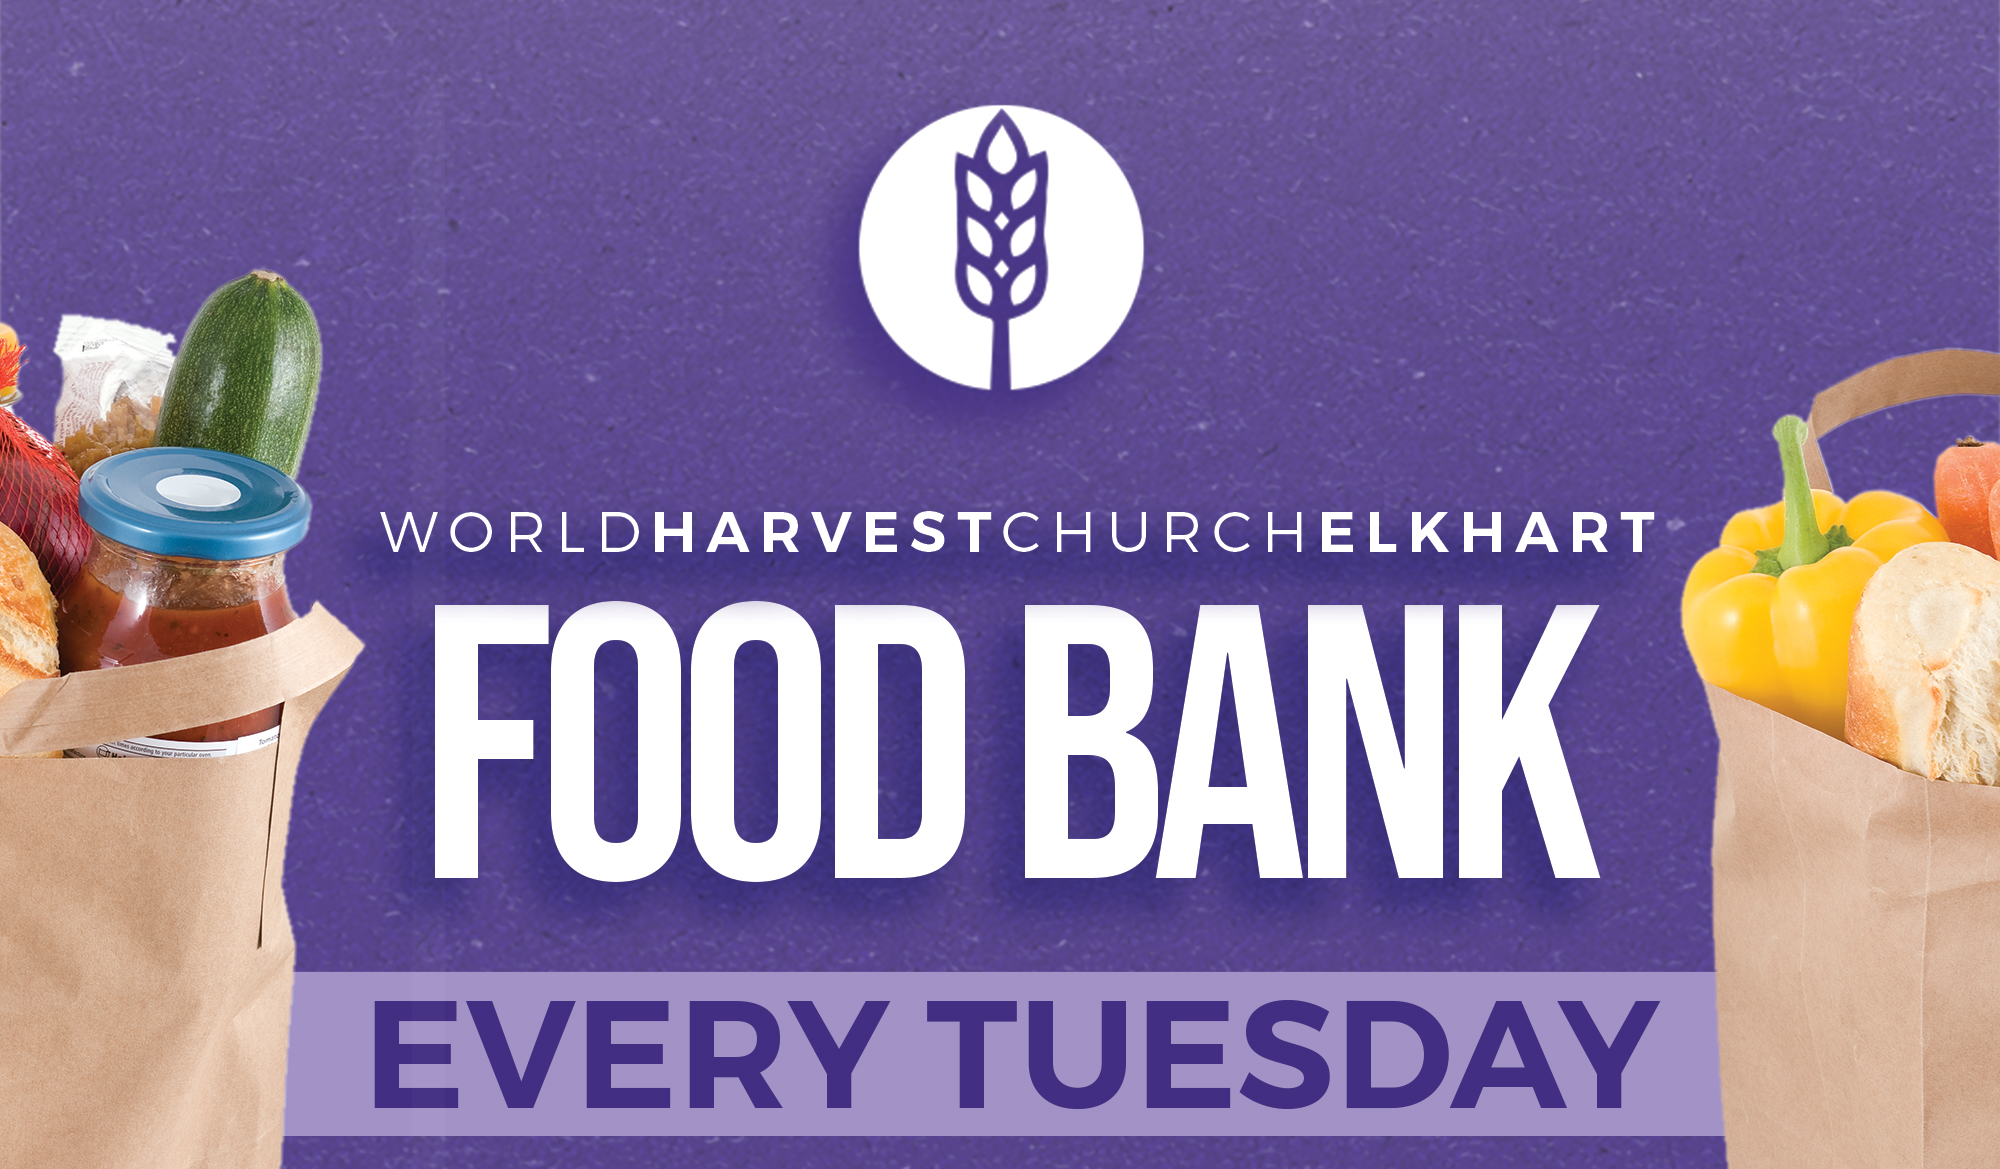 World Harvest Church Elkhart Food Bank Every Tuesday